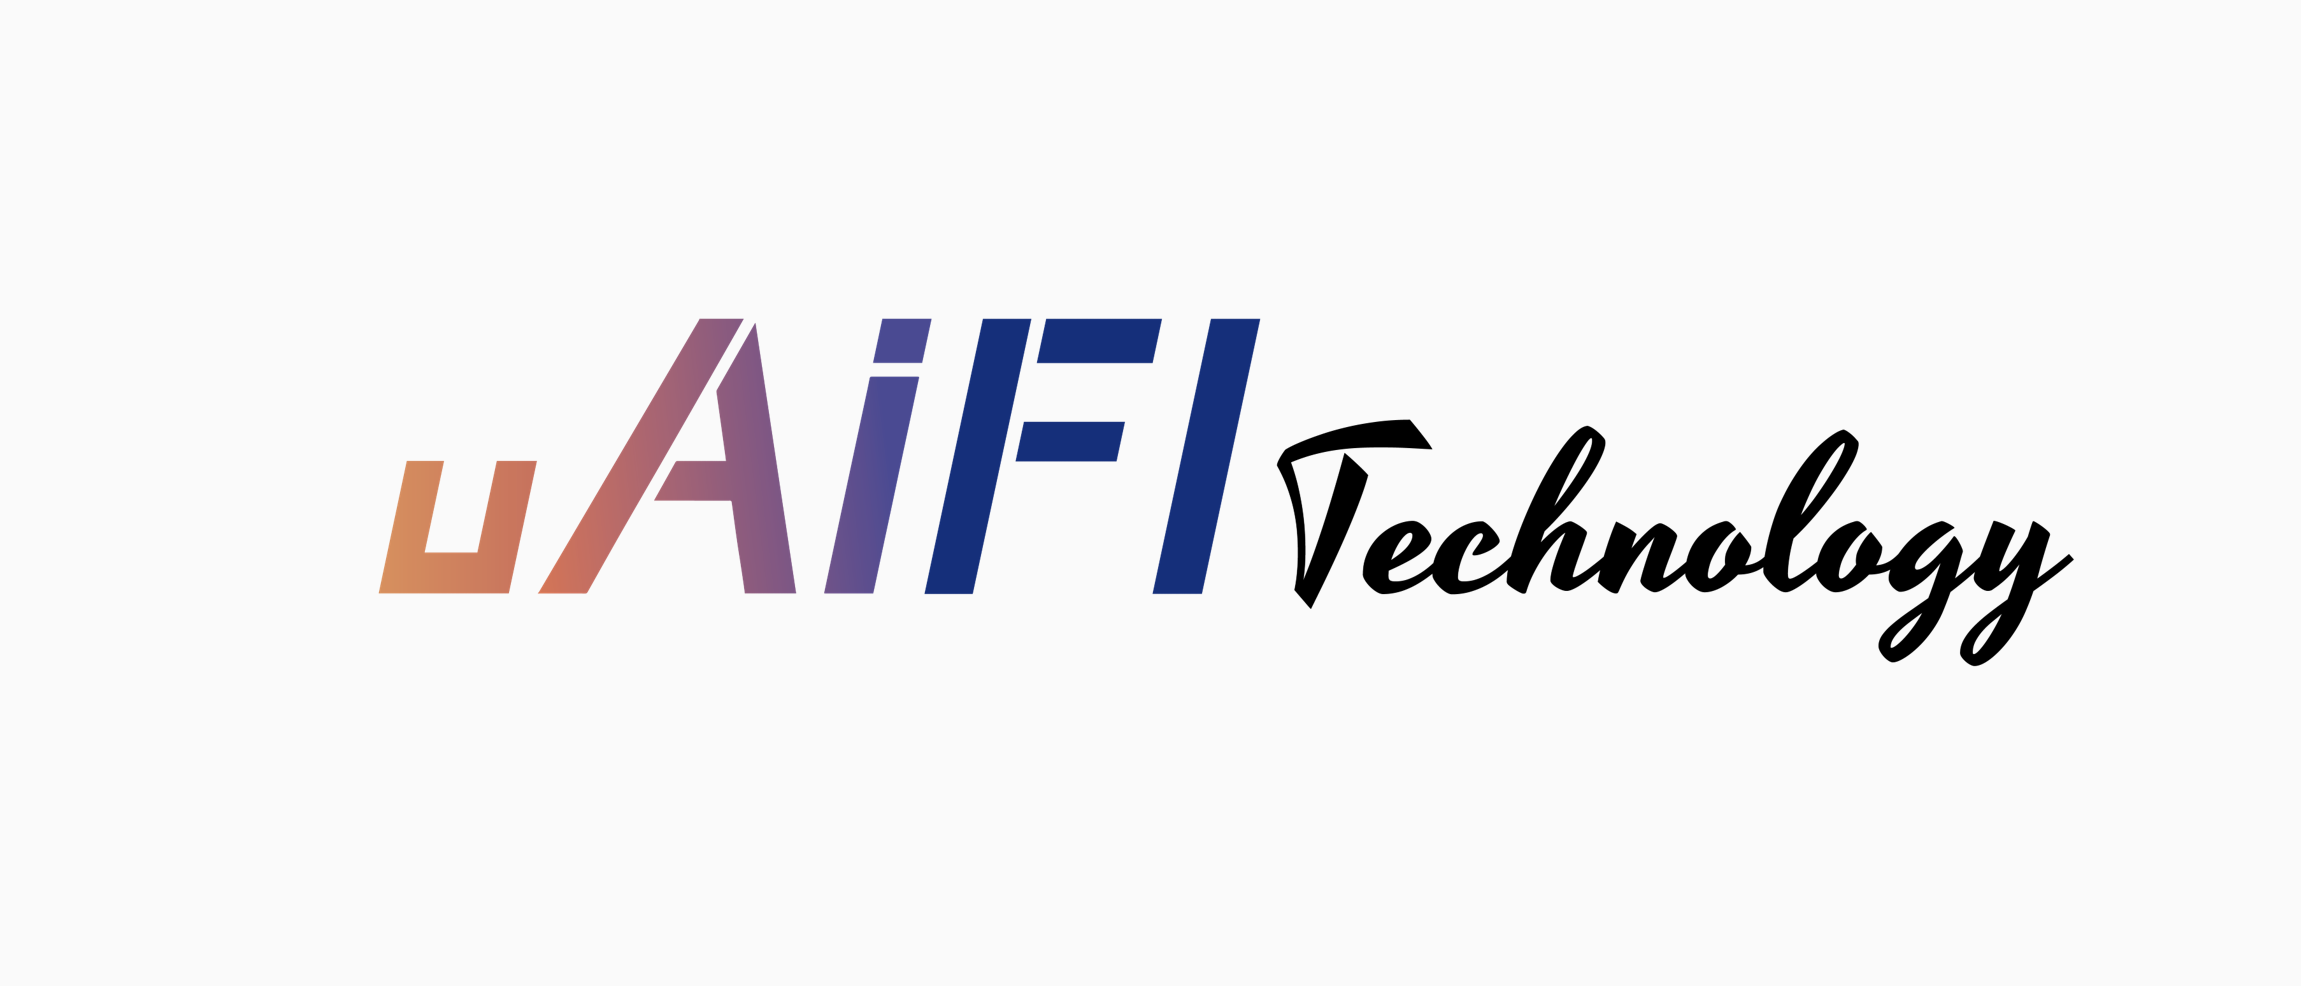 colorful uAIFI Technology logo